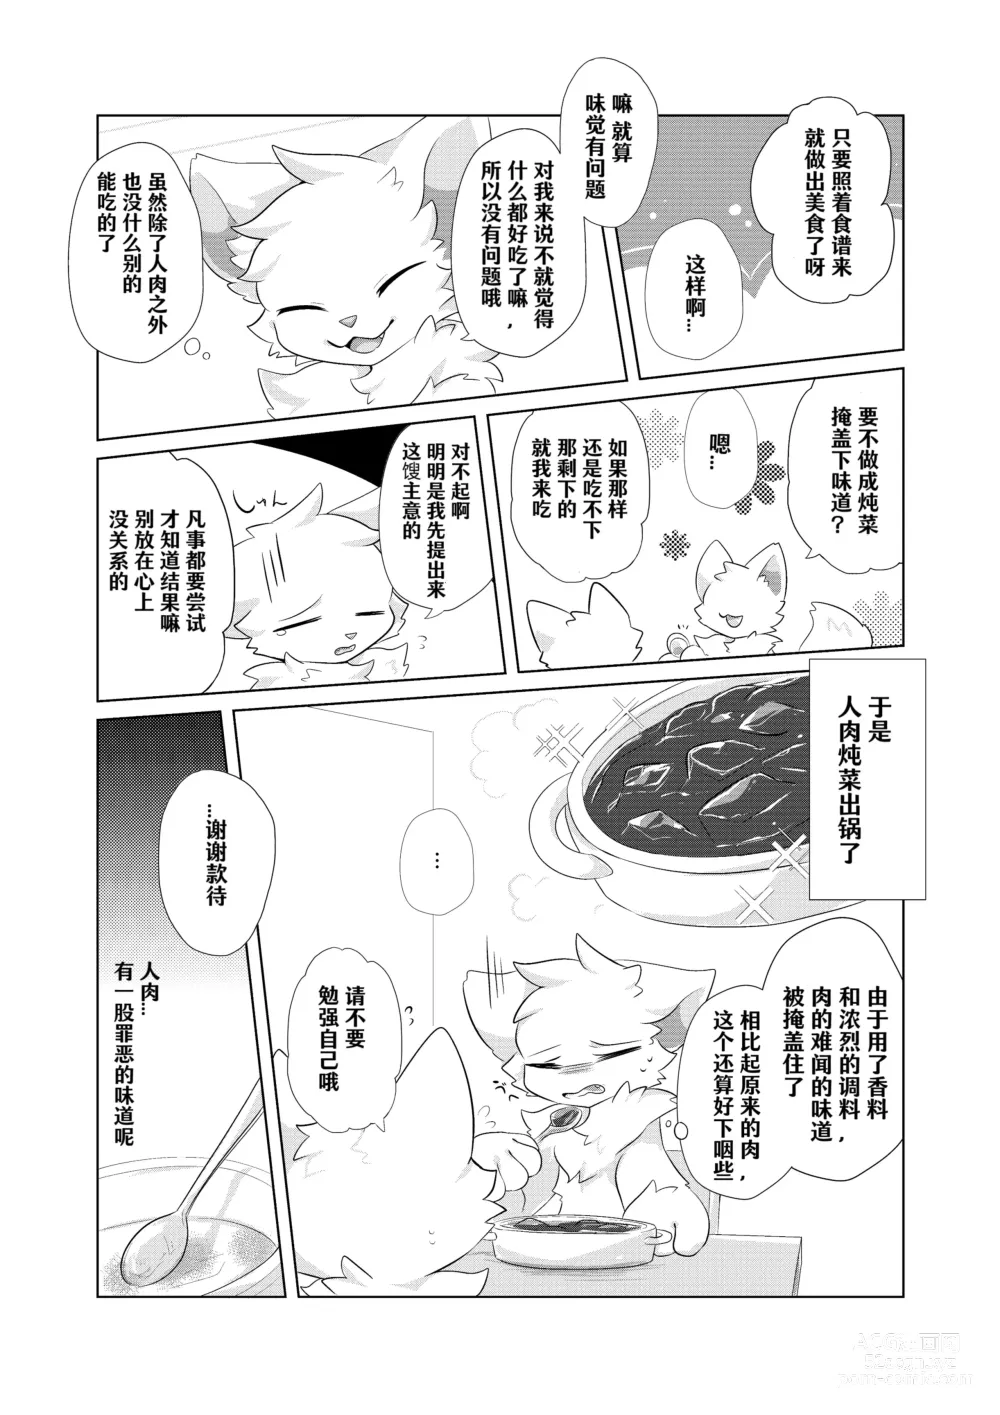 Page 62 of doujinshi 在生命长途中，与你携手同行！